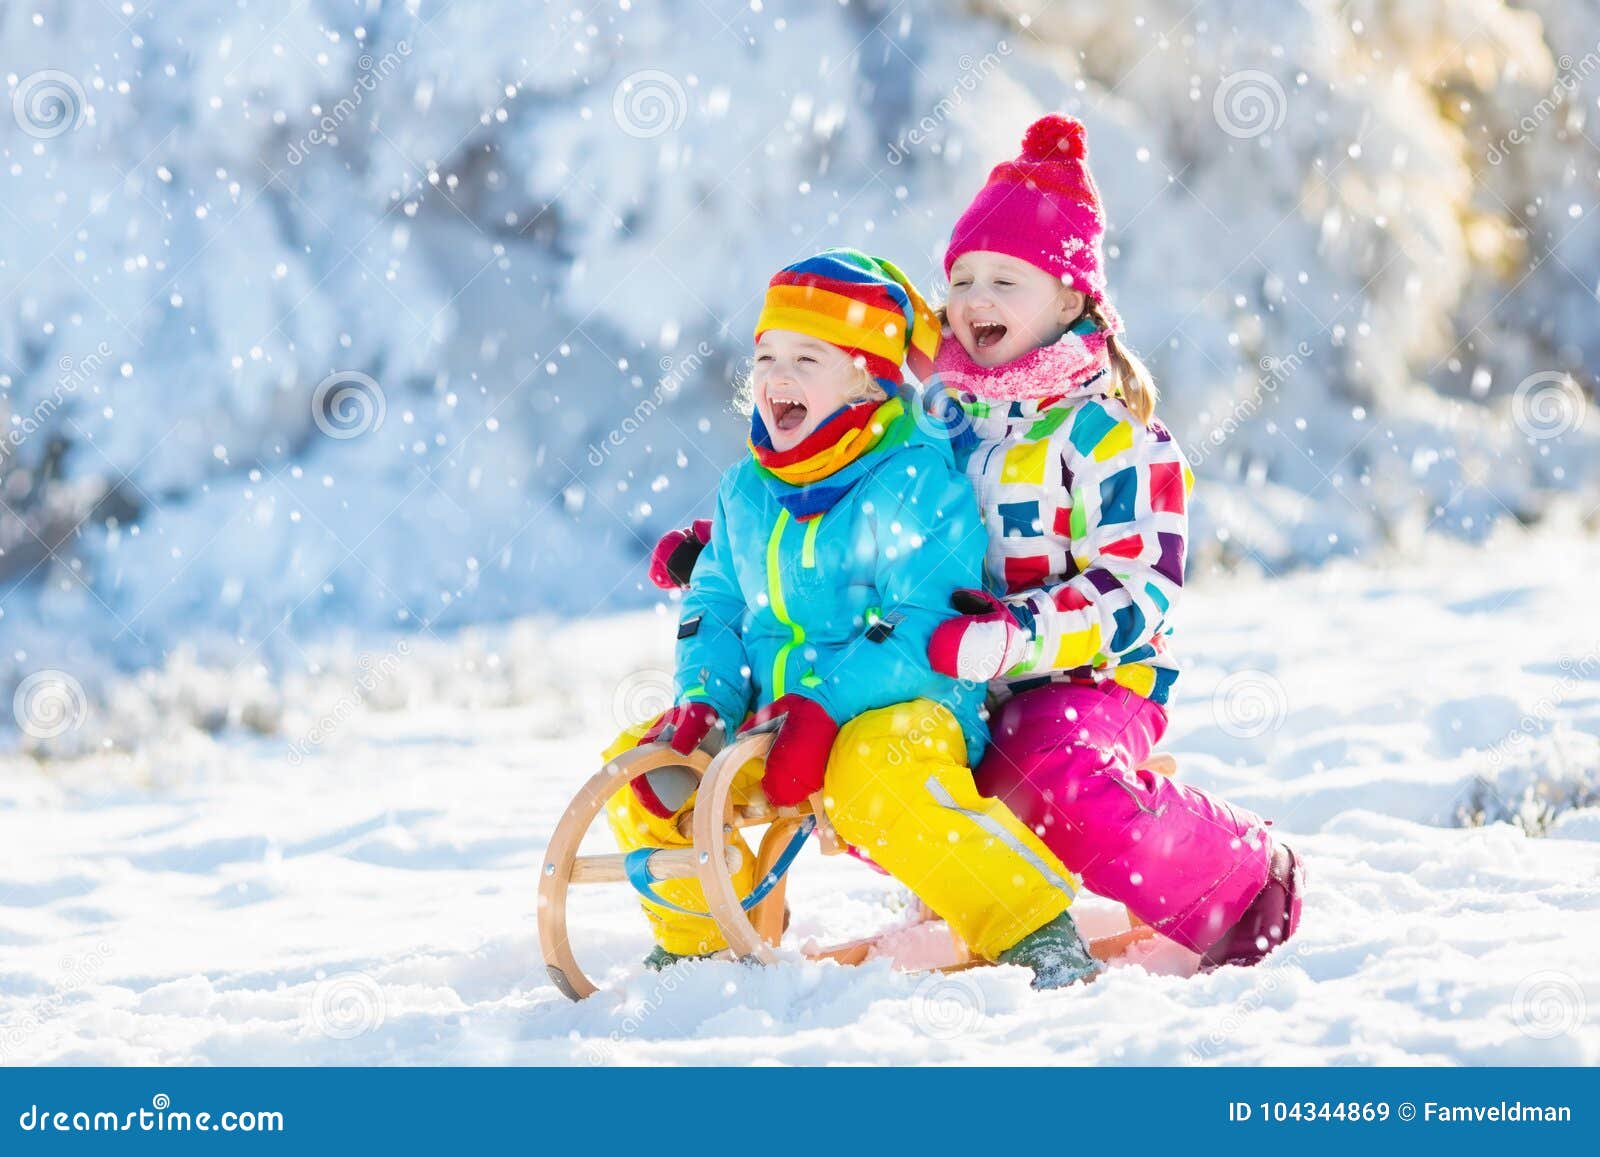 kids play in snow. winter sleigh ride for children